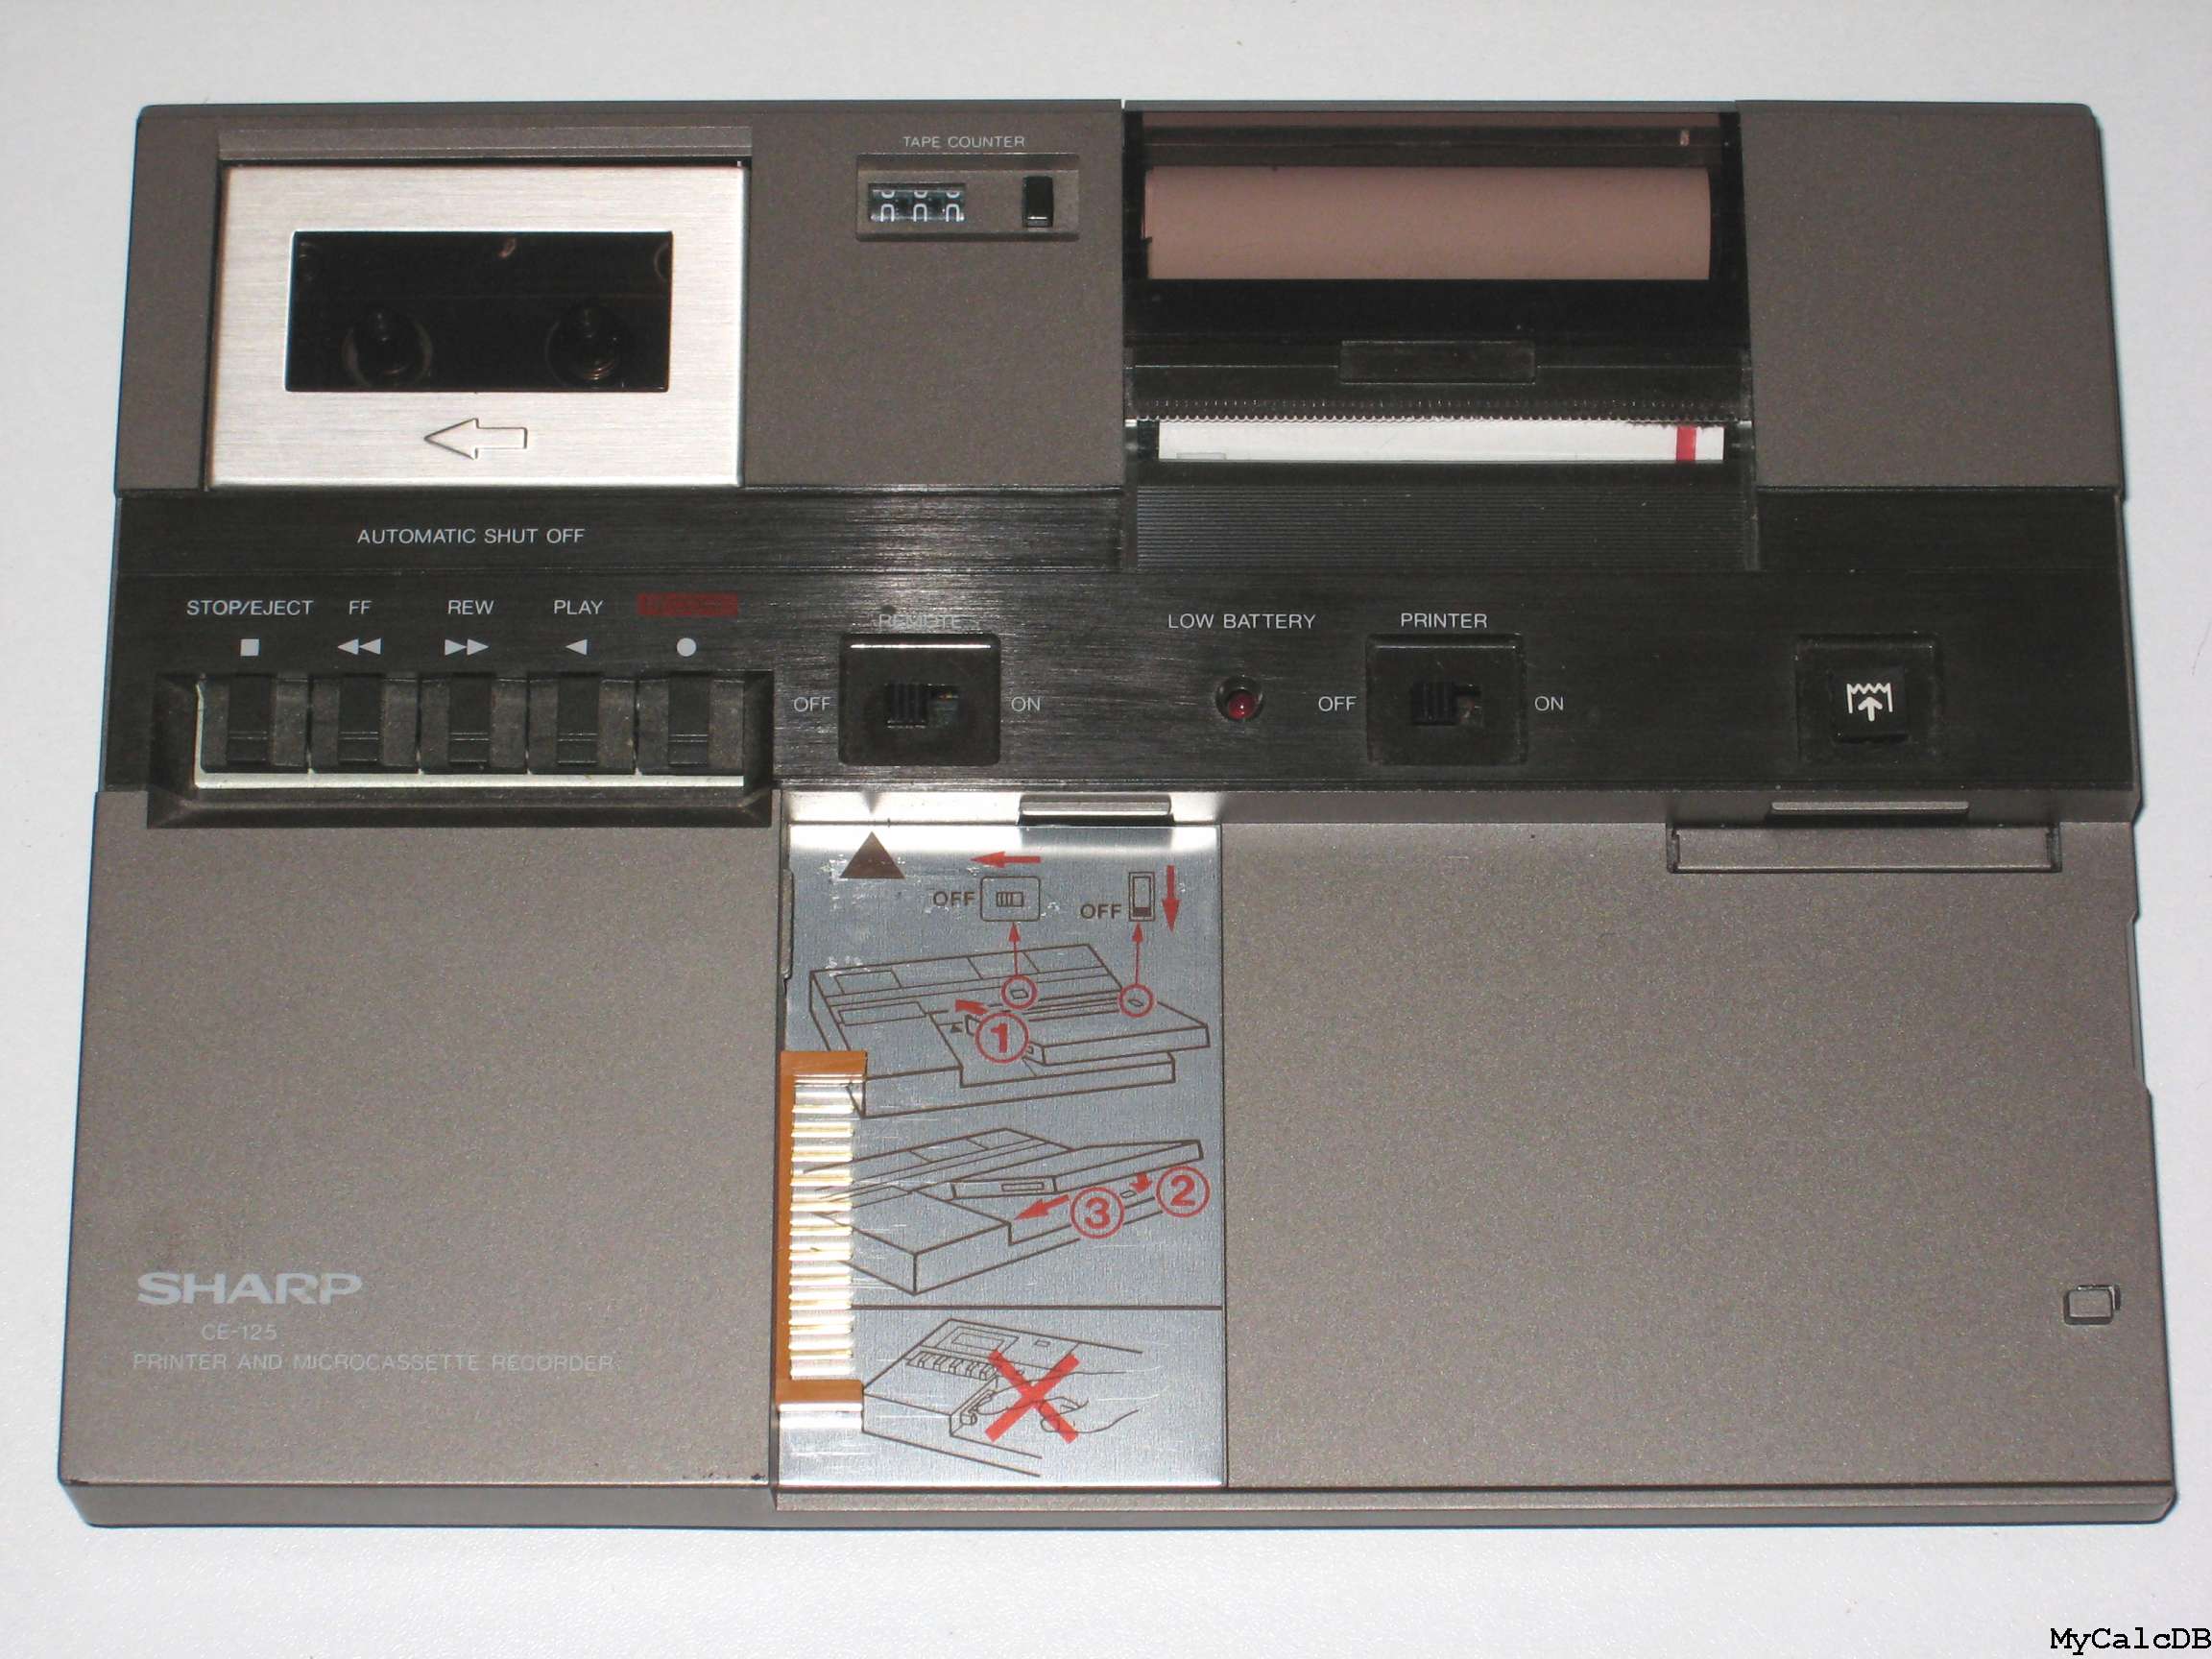 Sharp PC-1262